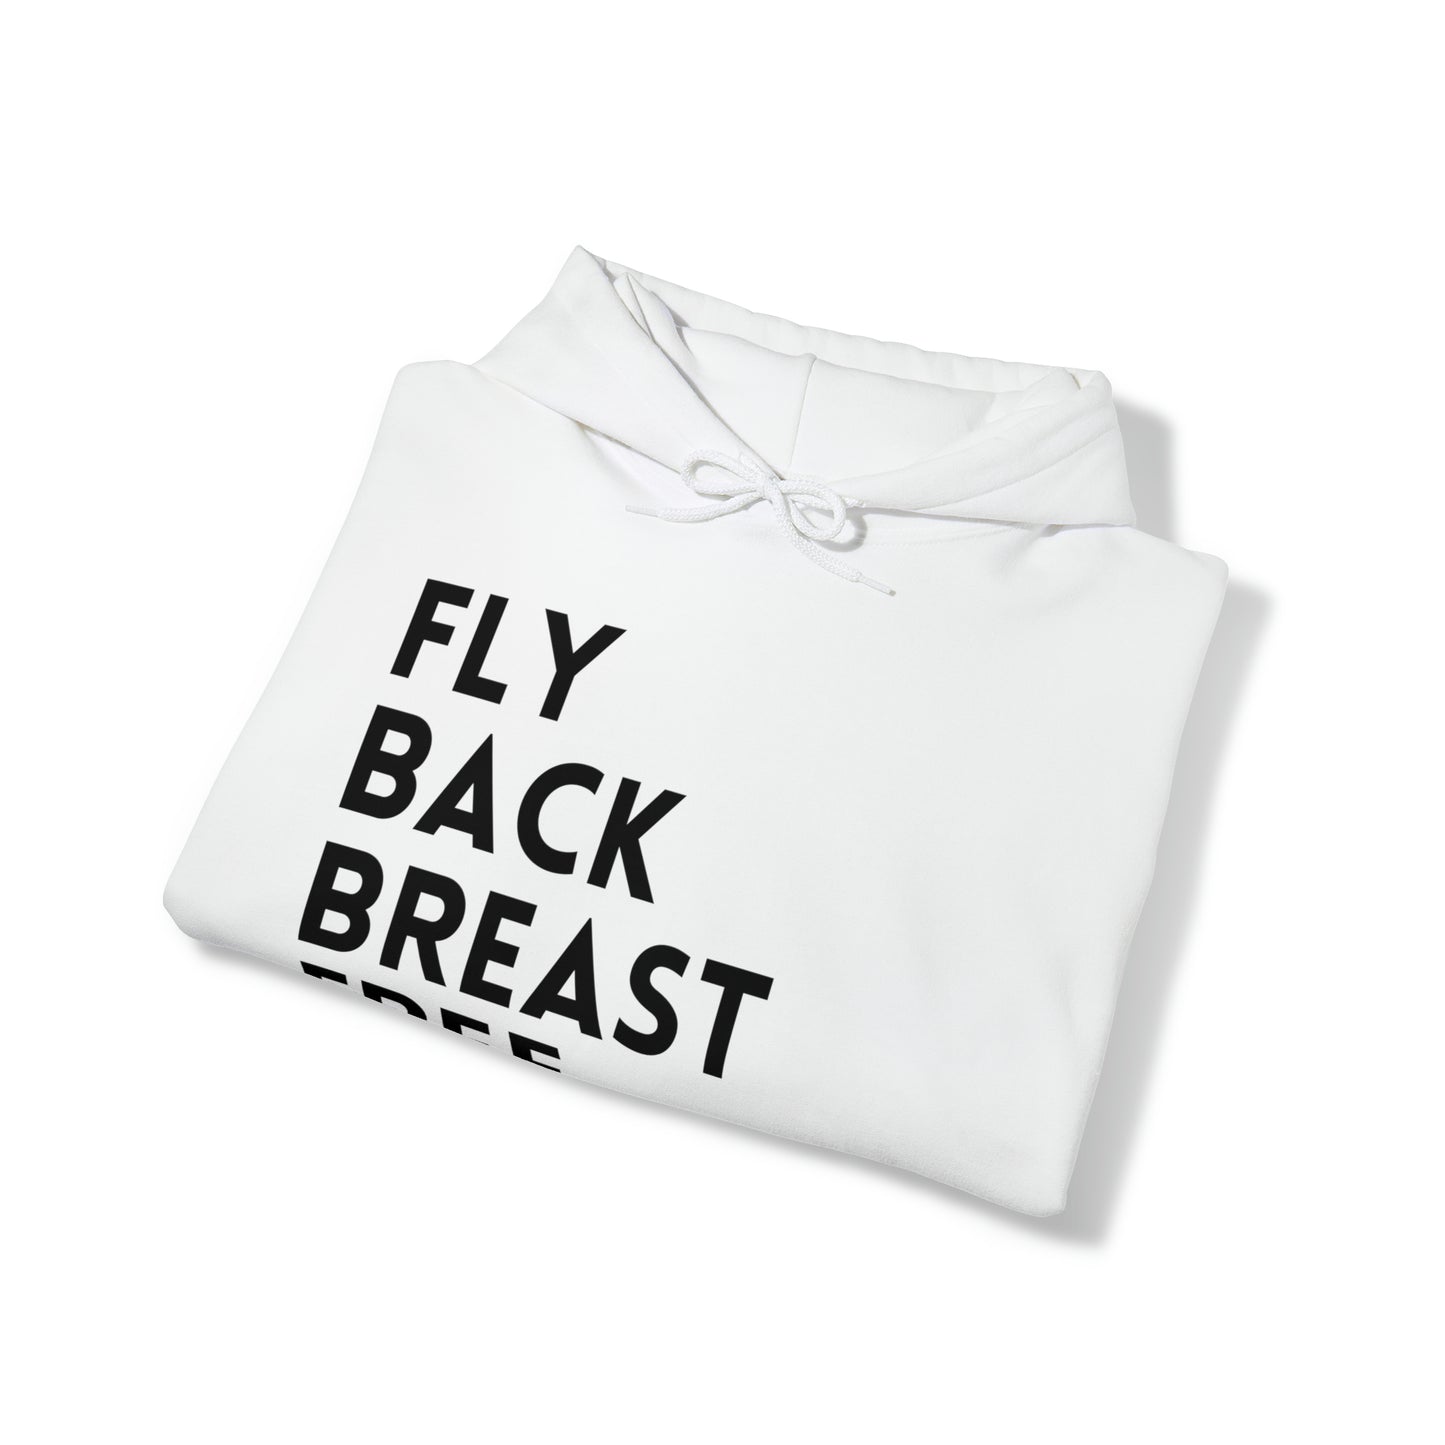 Fly Back Breast Free Adult Unisex Hoodie